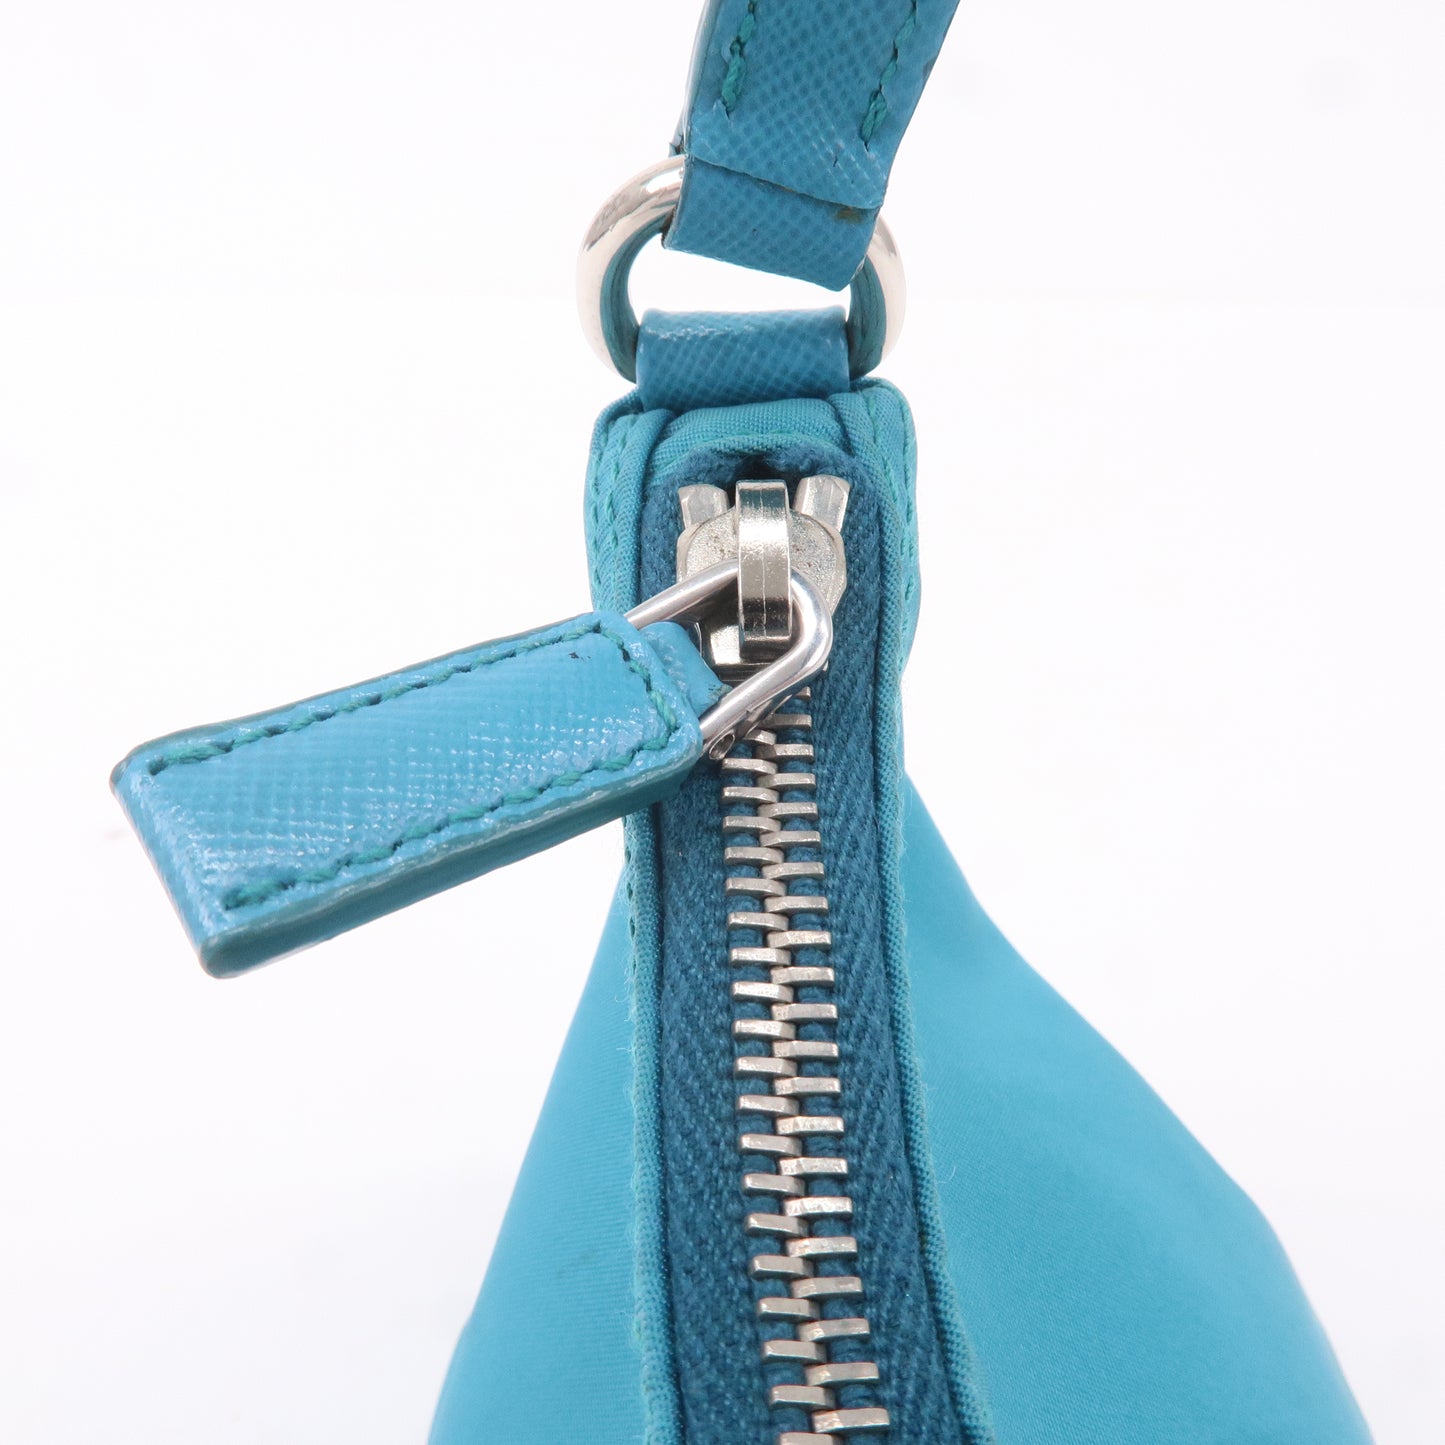 PRADA Nylon Leather Shoulder Bag Pouch Turquoise blue 1N1413